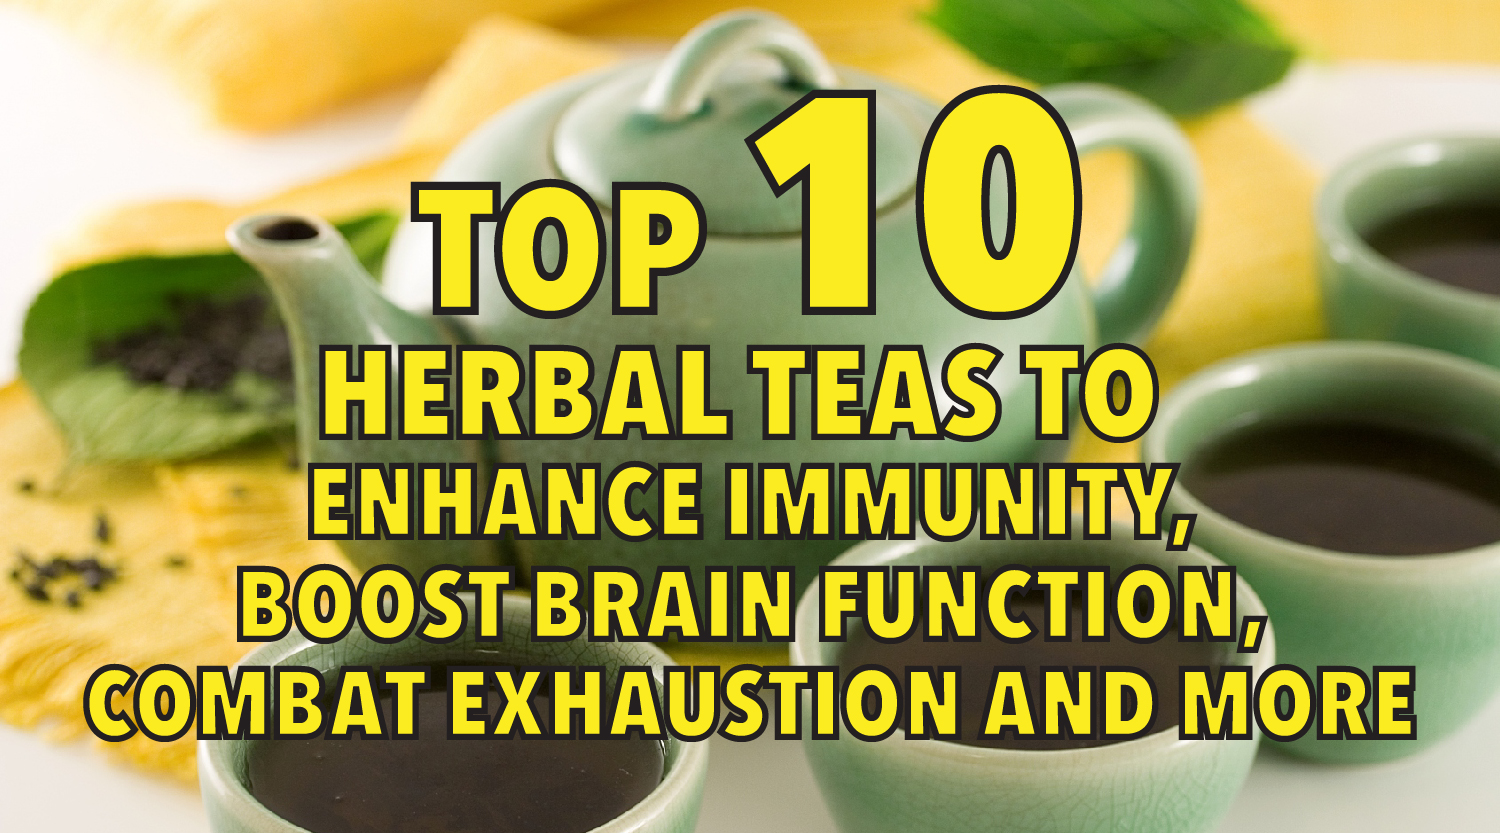 Top 10 herbal teas to improve immunity, etc